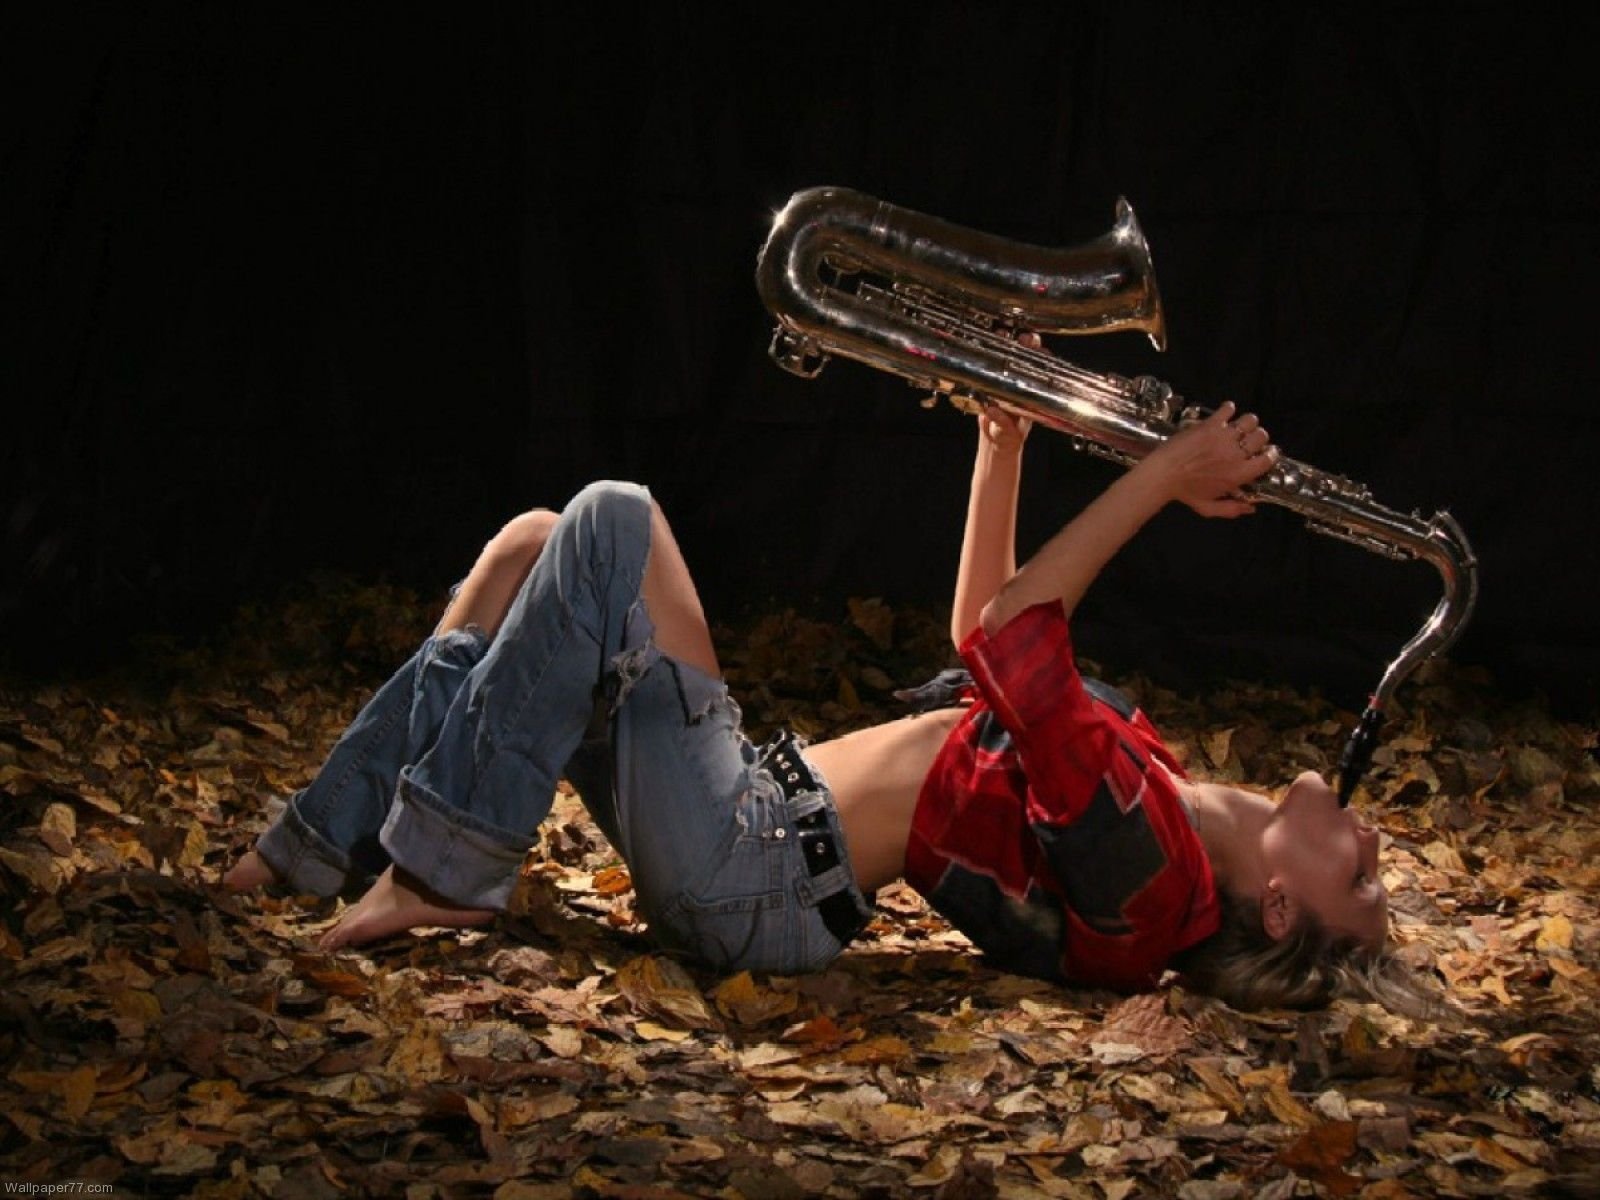 Музыка саксофона играют девушки. Саксофон. Девочка с саксофоном. Саксофонист и девушка. Фотосессия с саксофоном.